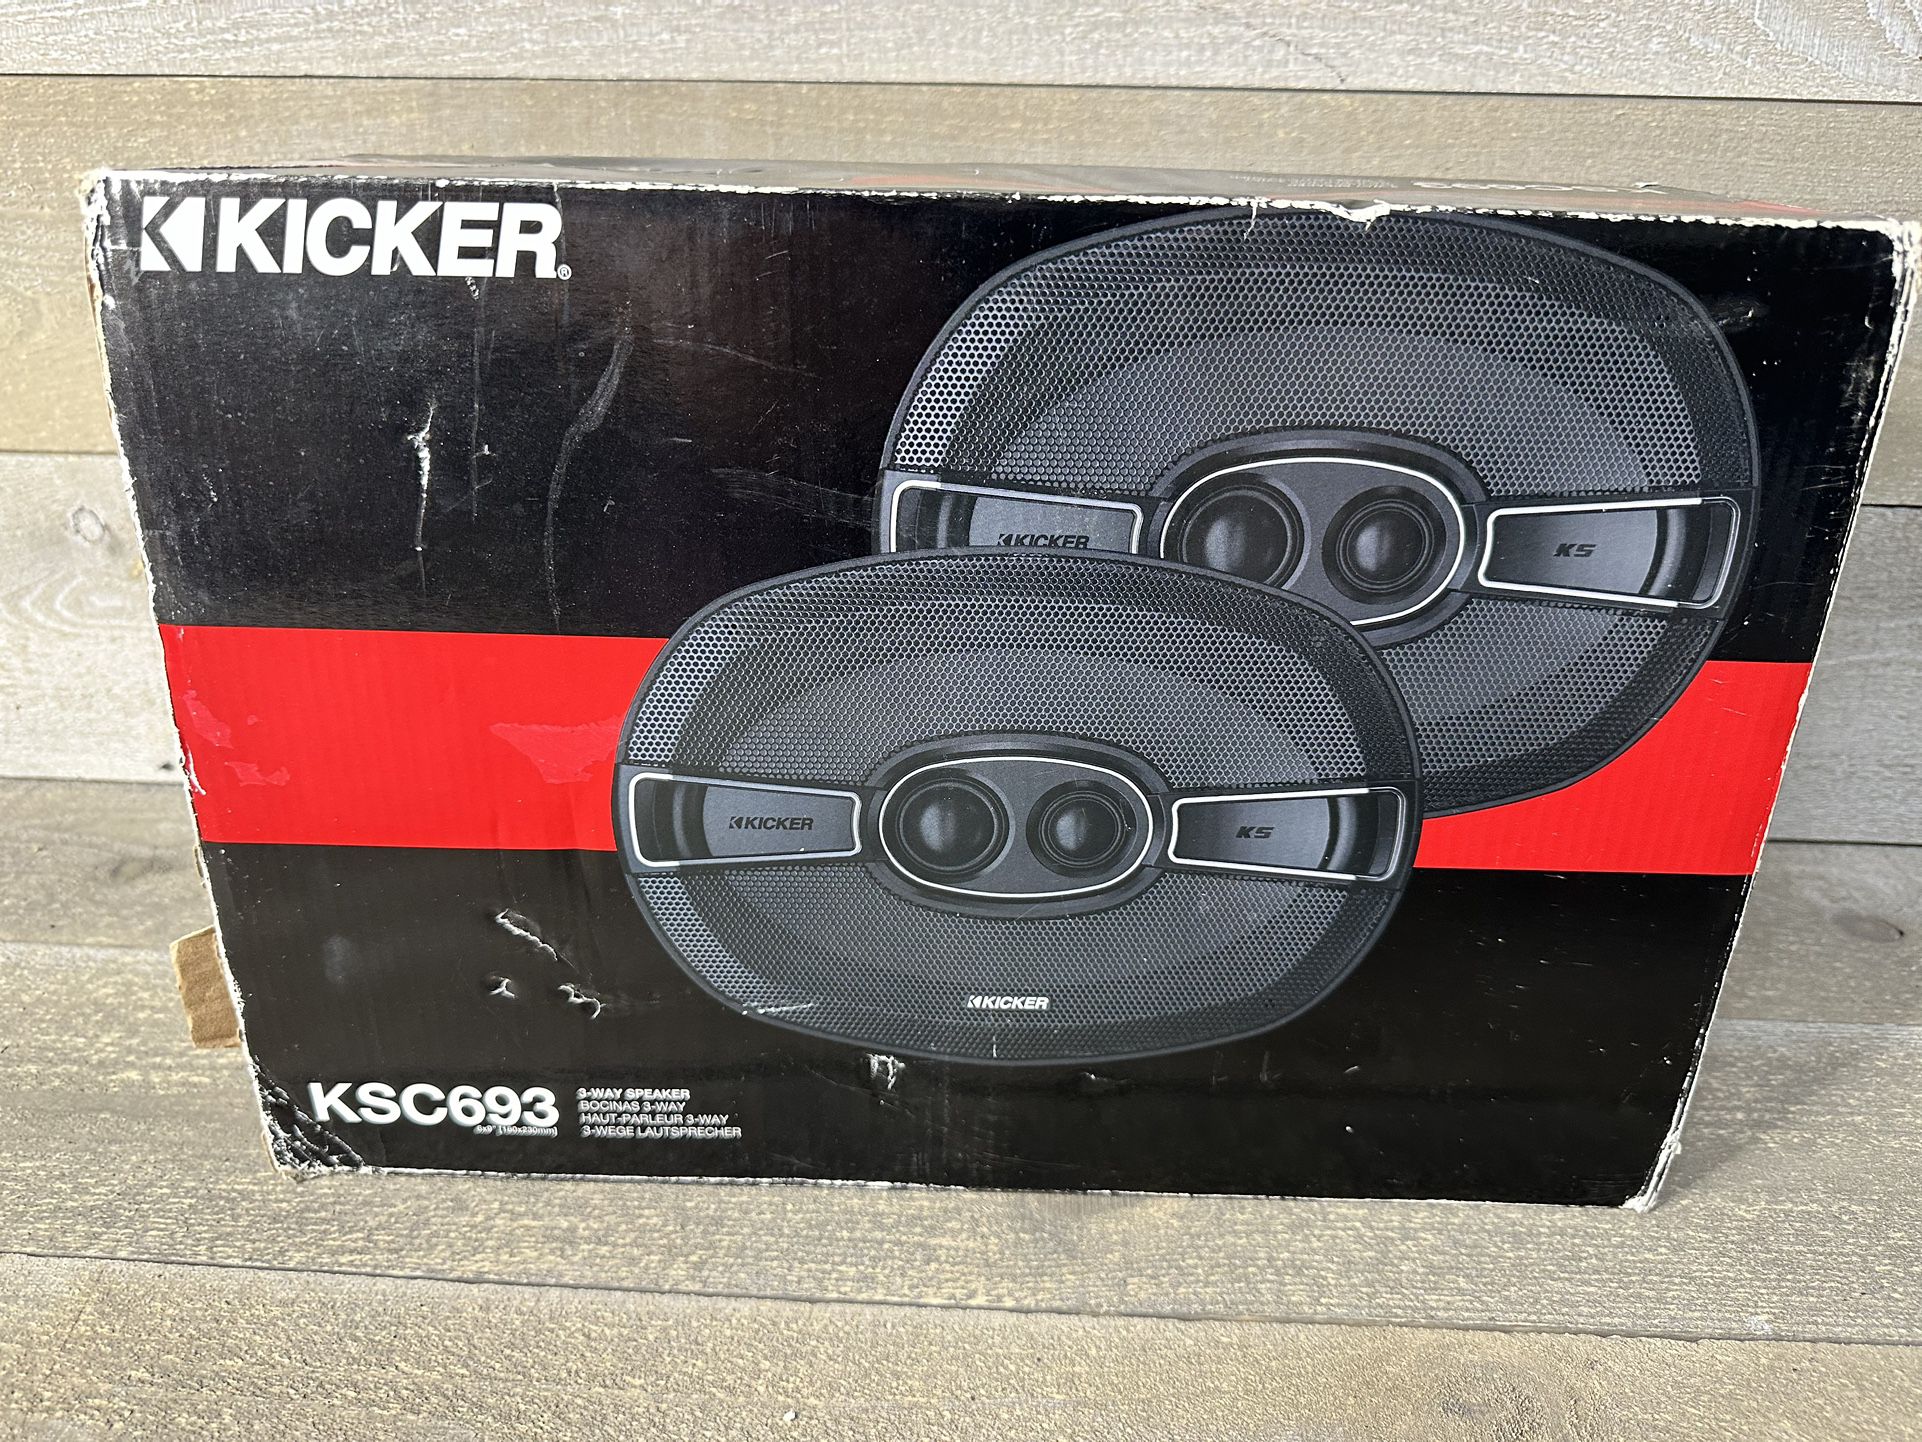 2 New Kicker 41KSC6934 6x9 3-Way 300 Watt Car Audio Coaxial Speakers KSC693